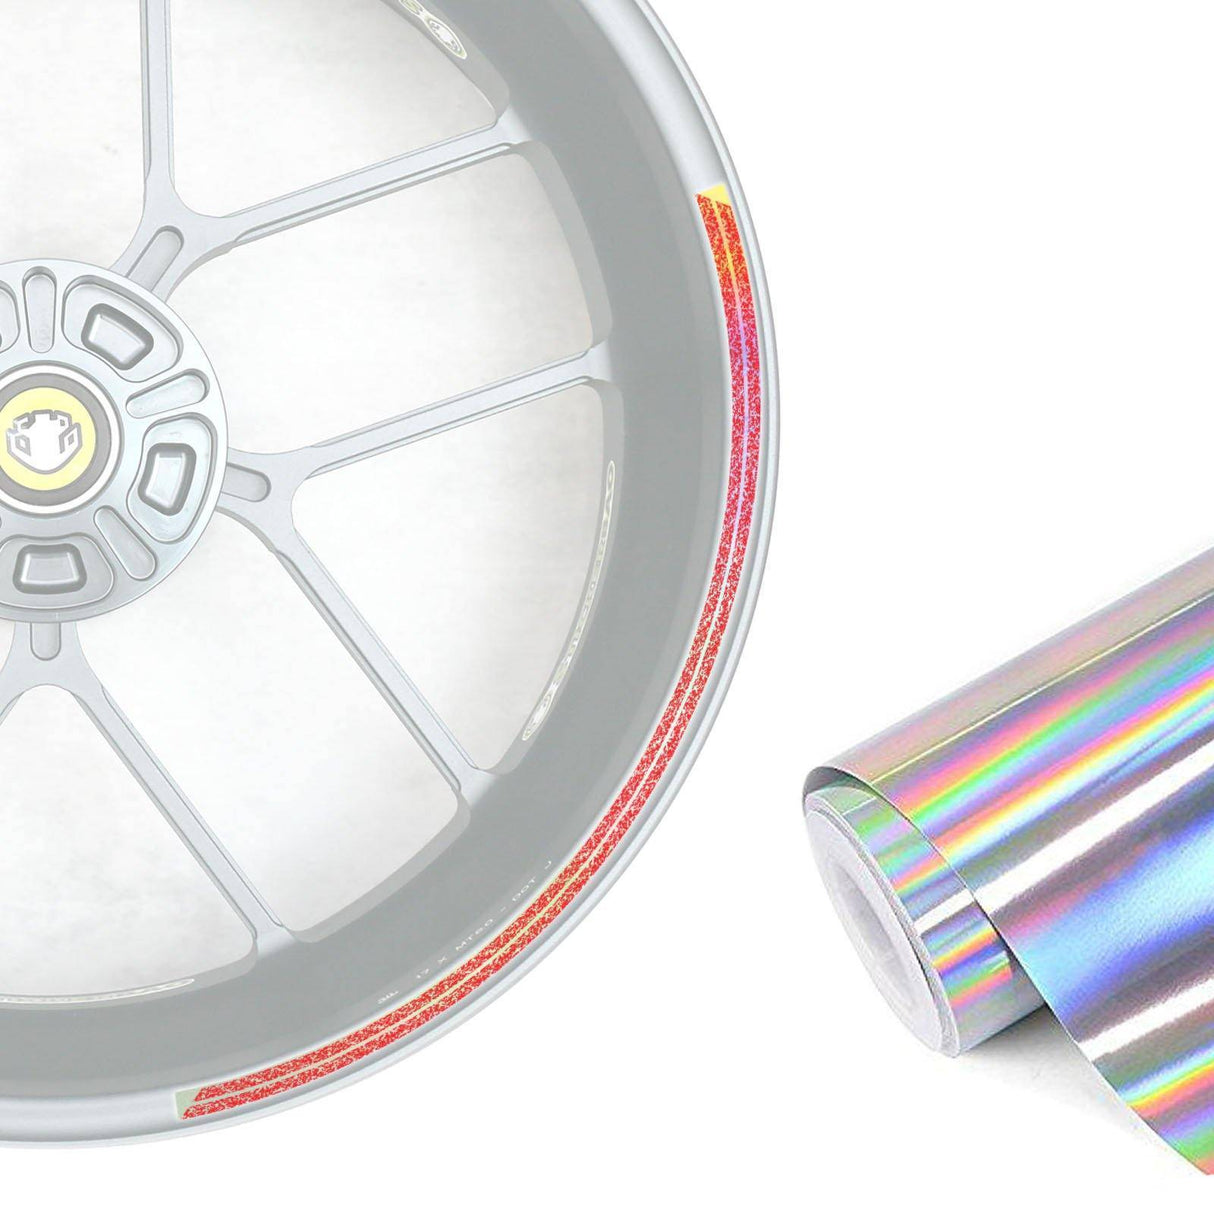 17 inch Rim Chrome Holographic Wheel Stickers J20 Rim Skin Decal Strip | For Yamaha YZF R1M R1S R125 Thundercat.